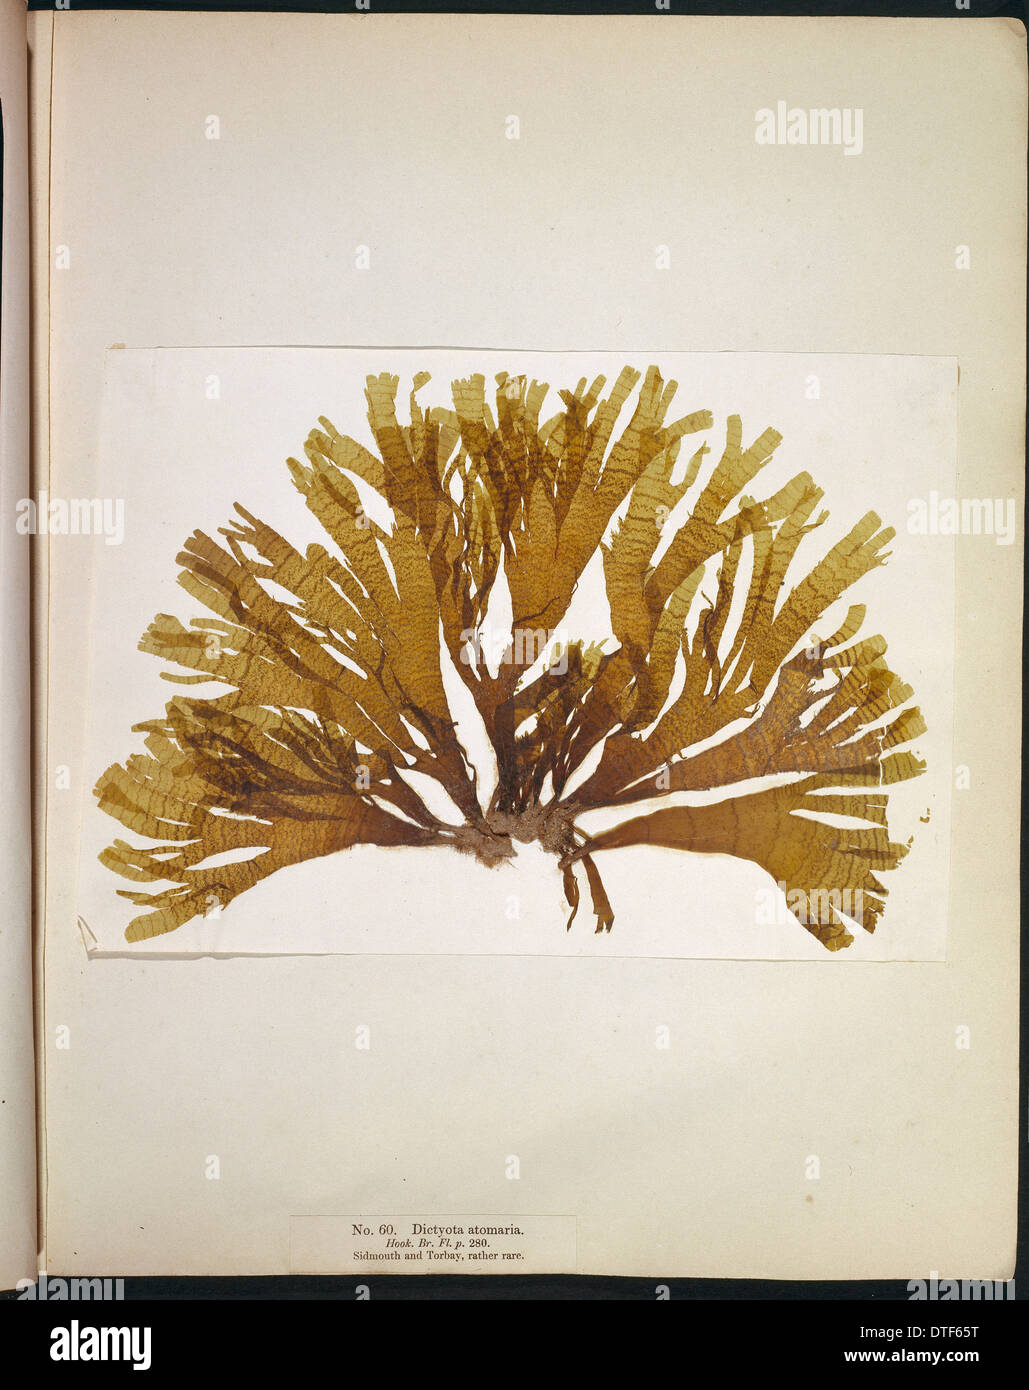 Dictyota atomaria, seaweed Stock Photo